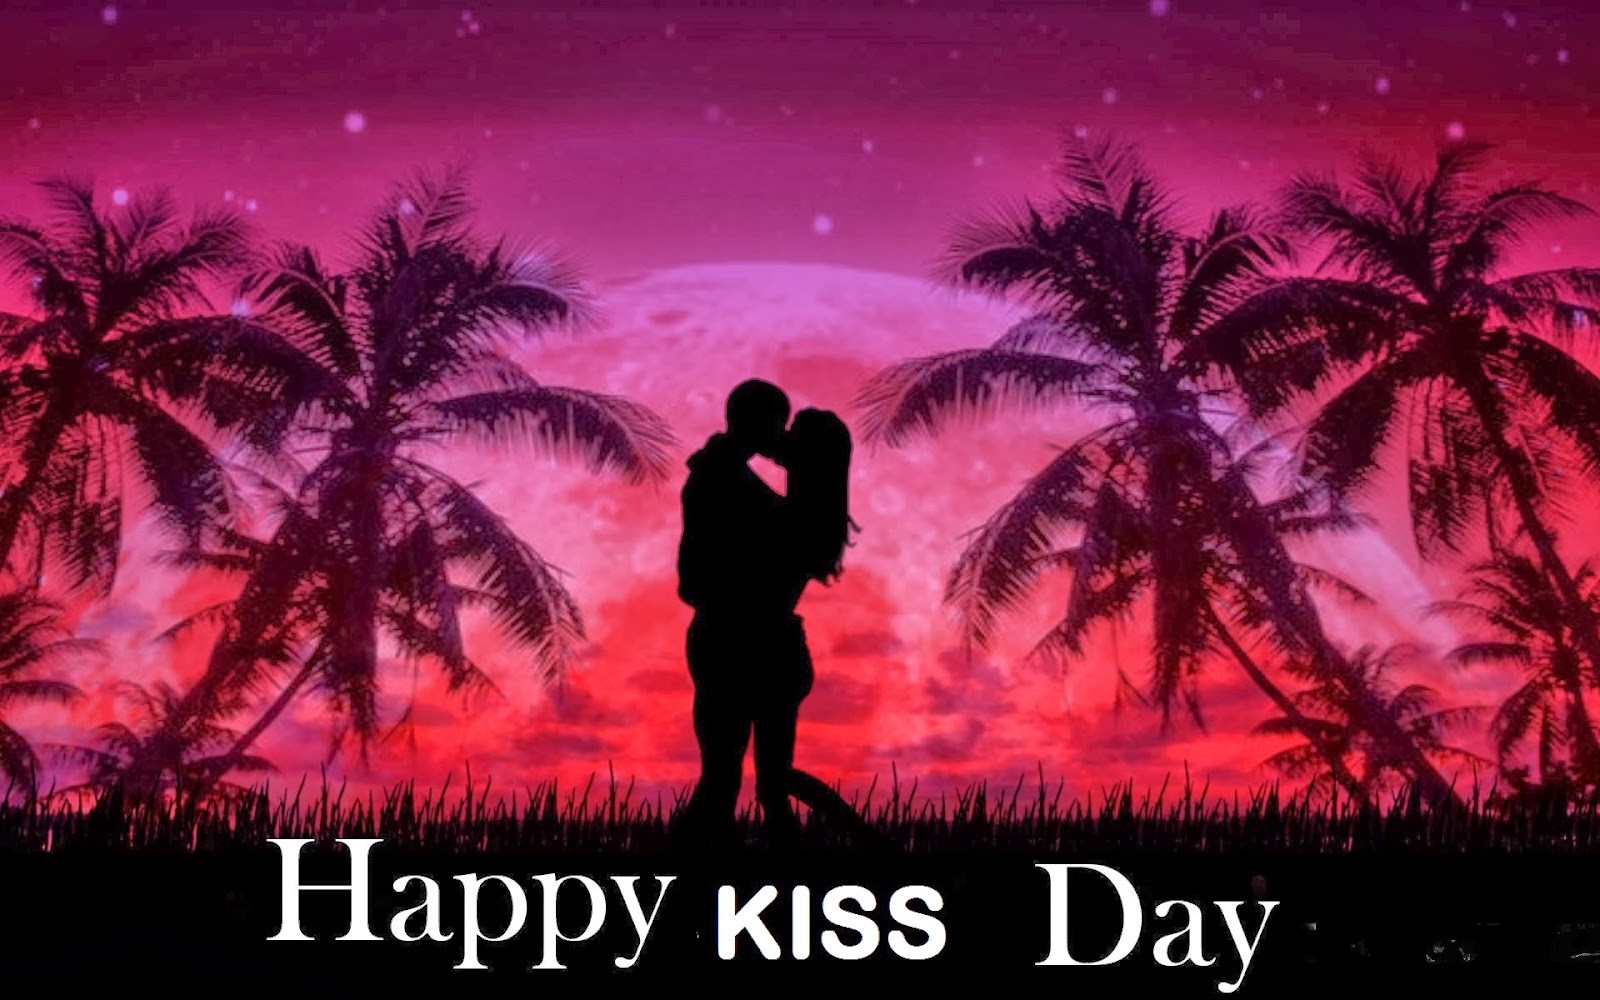 Happy Kiss Day Wallpaper In HD New